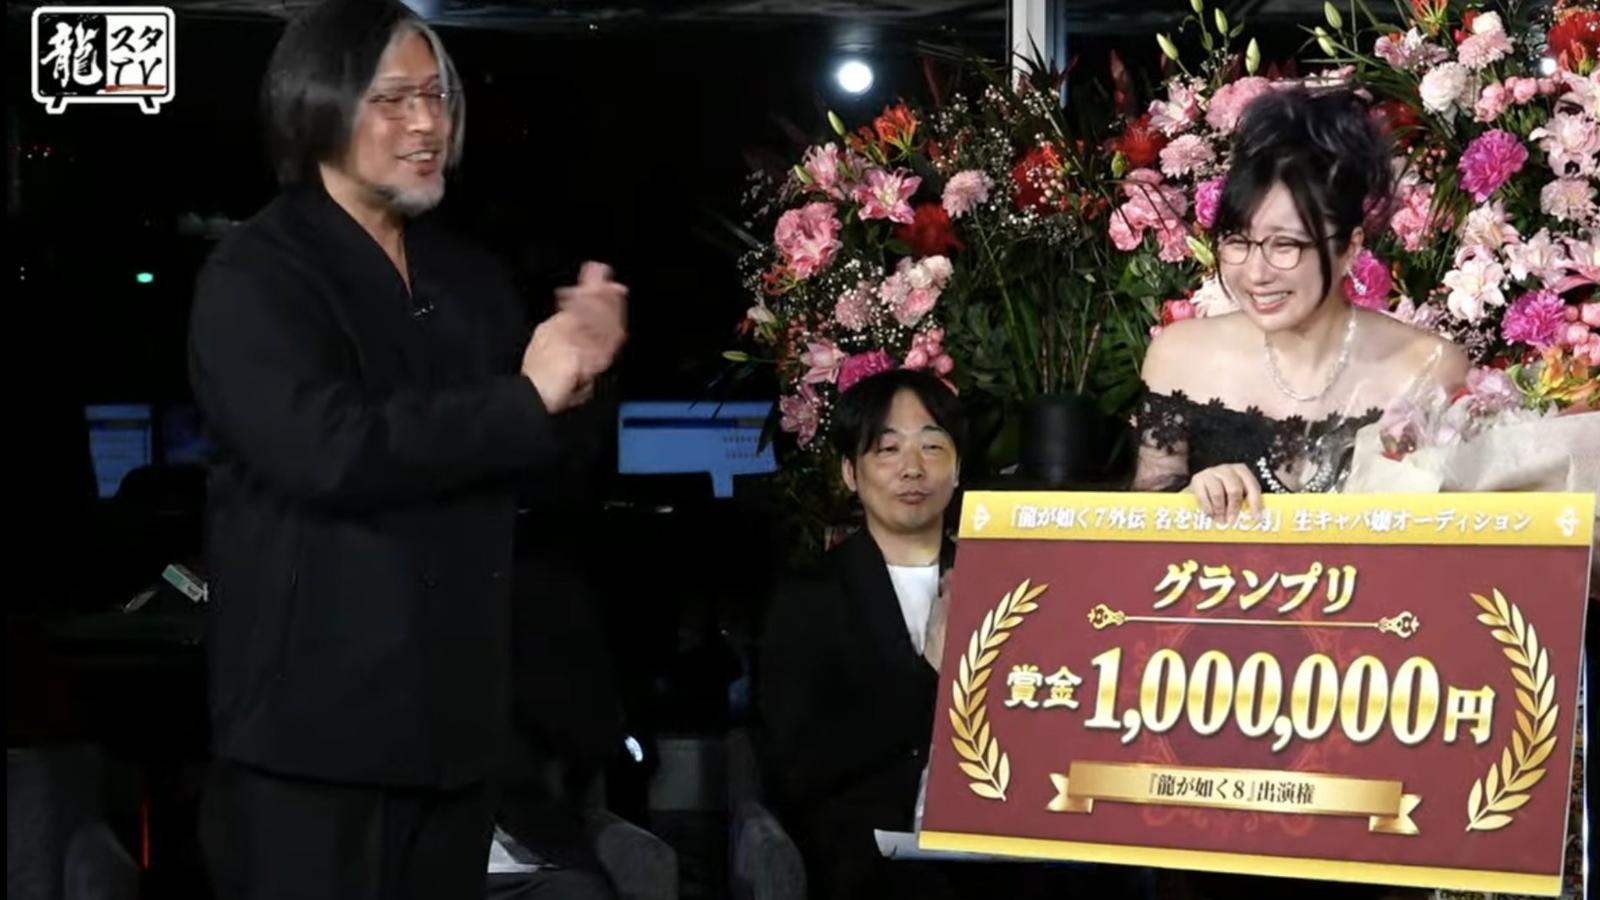 Winner of Sega's hostess contest, Kson, holding a 1 milion yen cheque